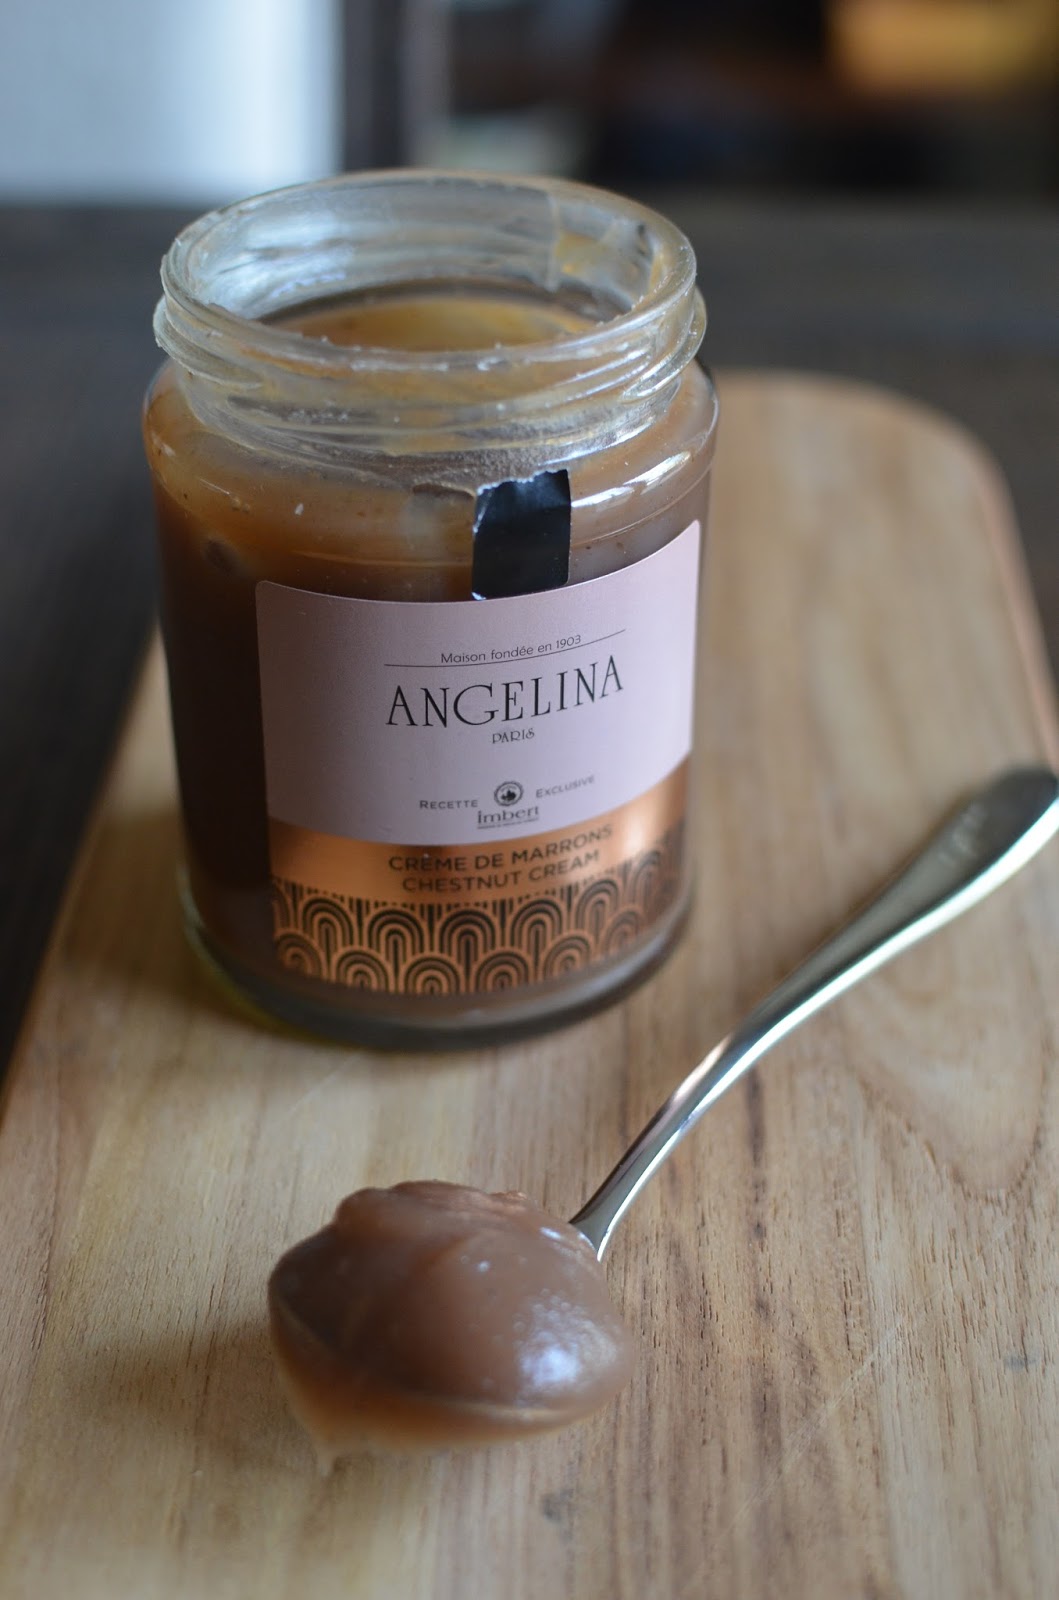 Crème de marrons - Angelina